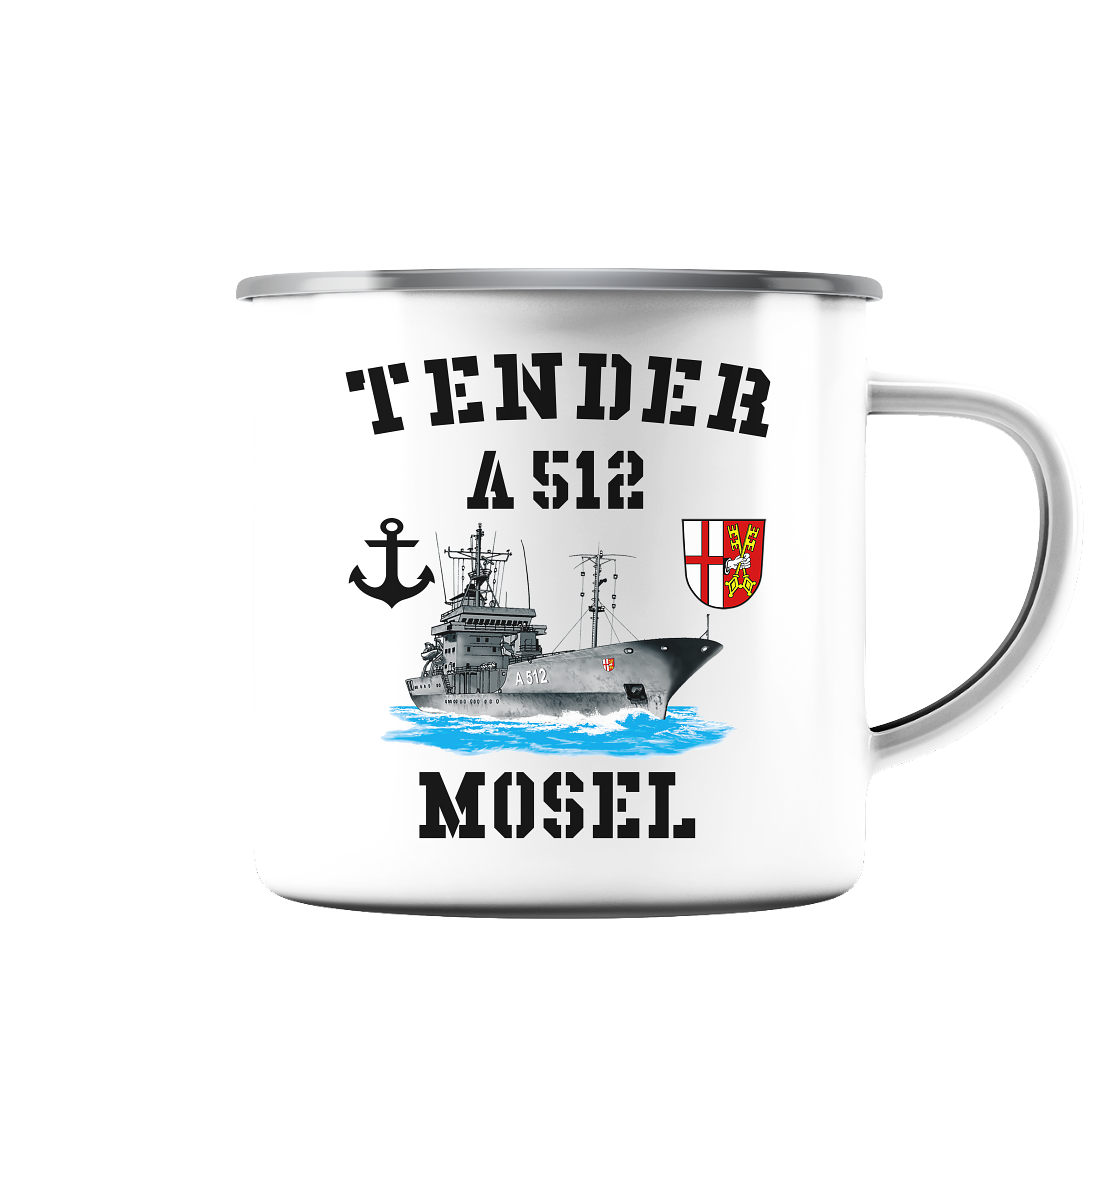 Tender A512 MOSEL Anker - Emaille Tasse (Silber)